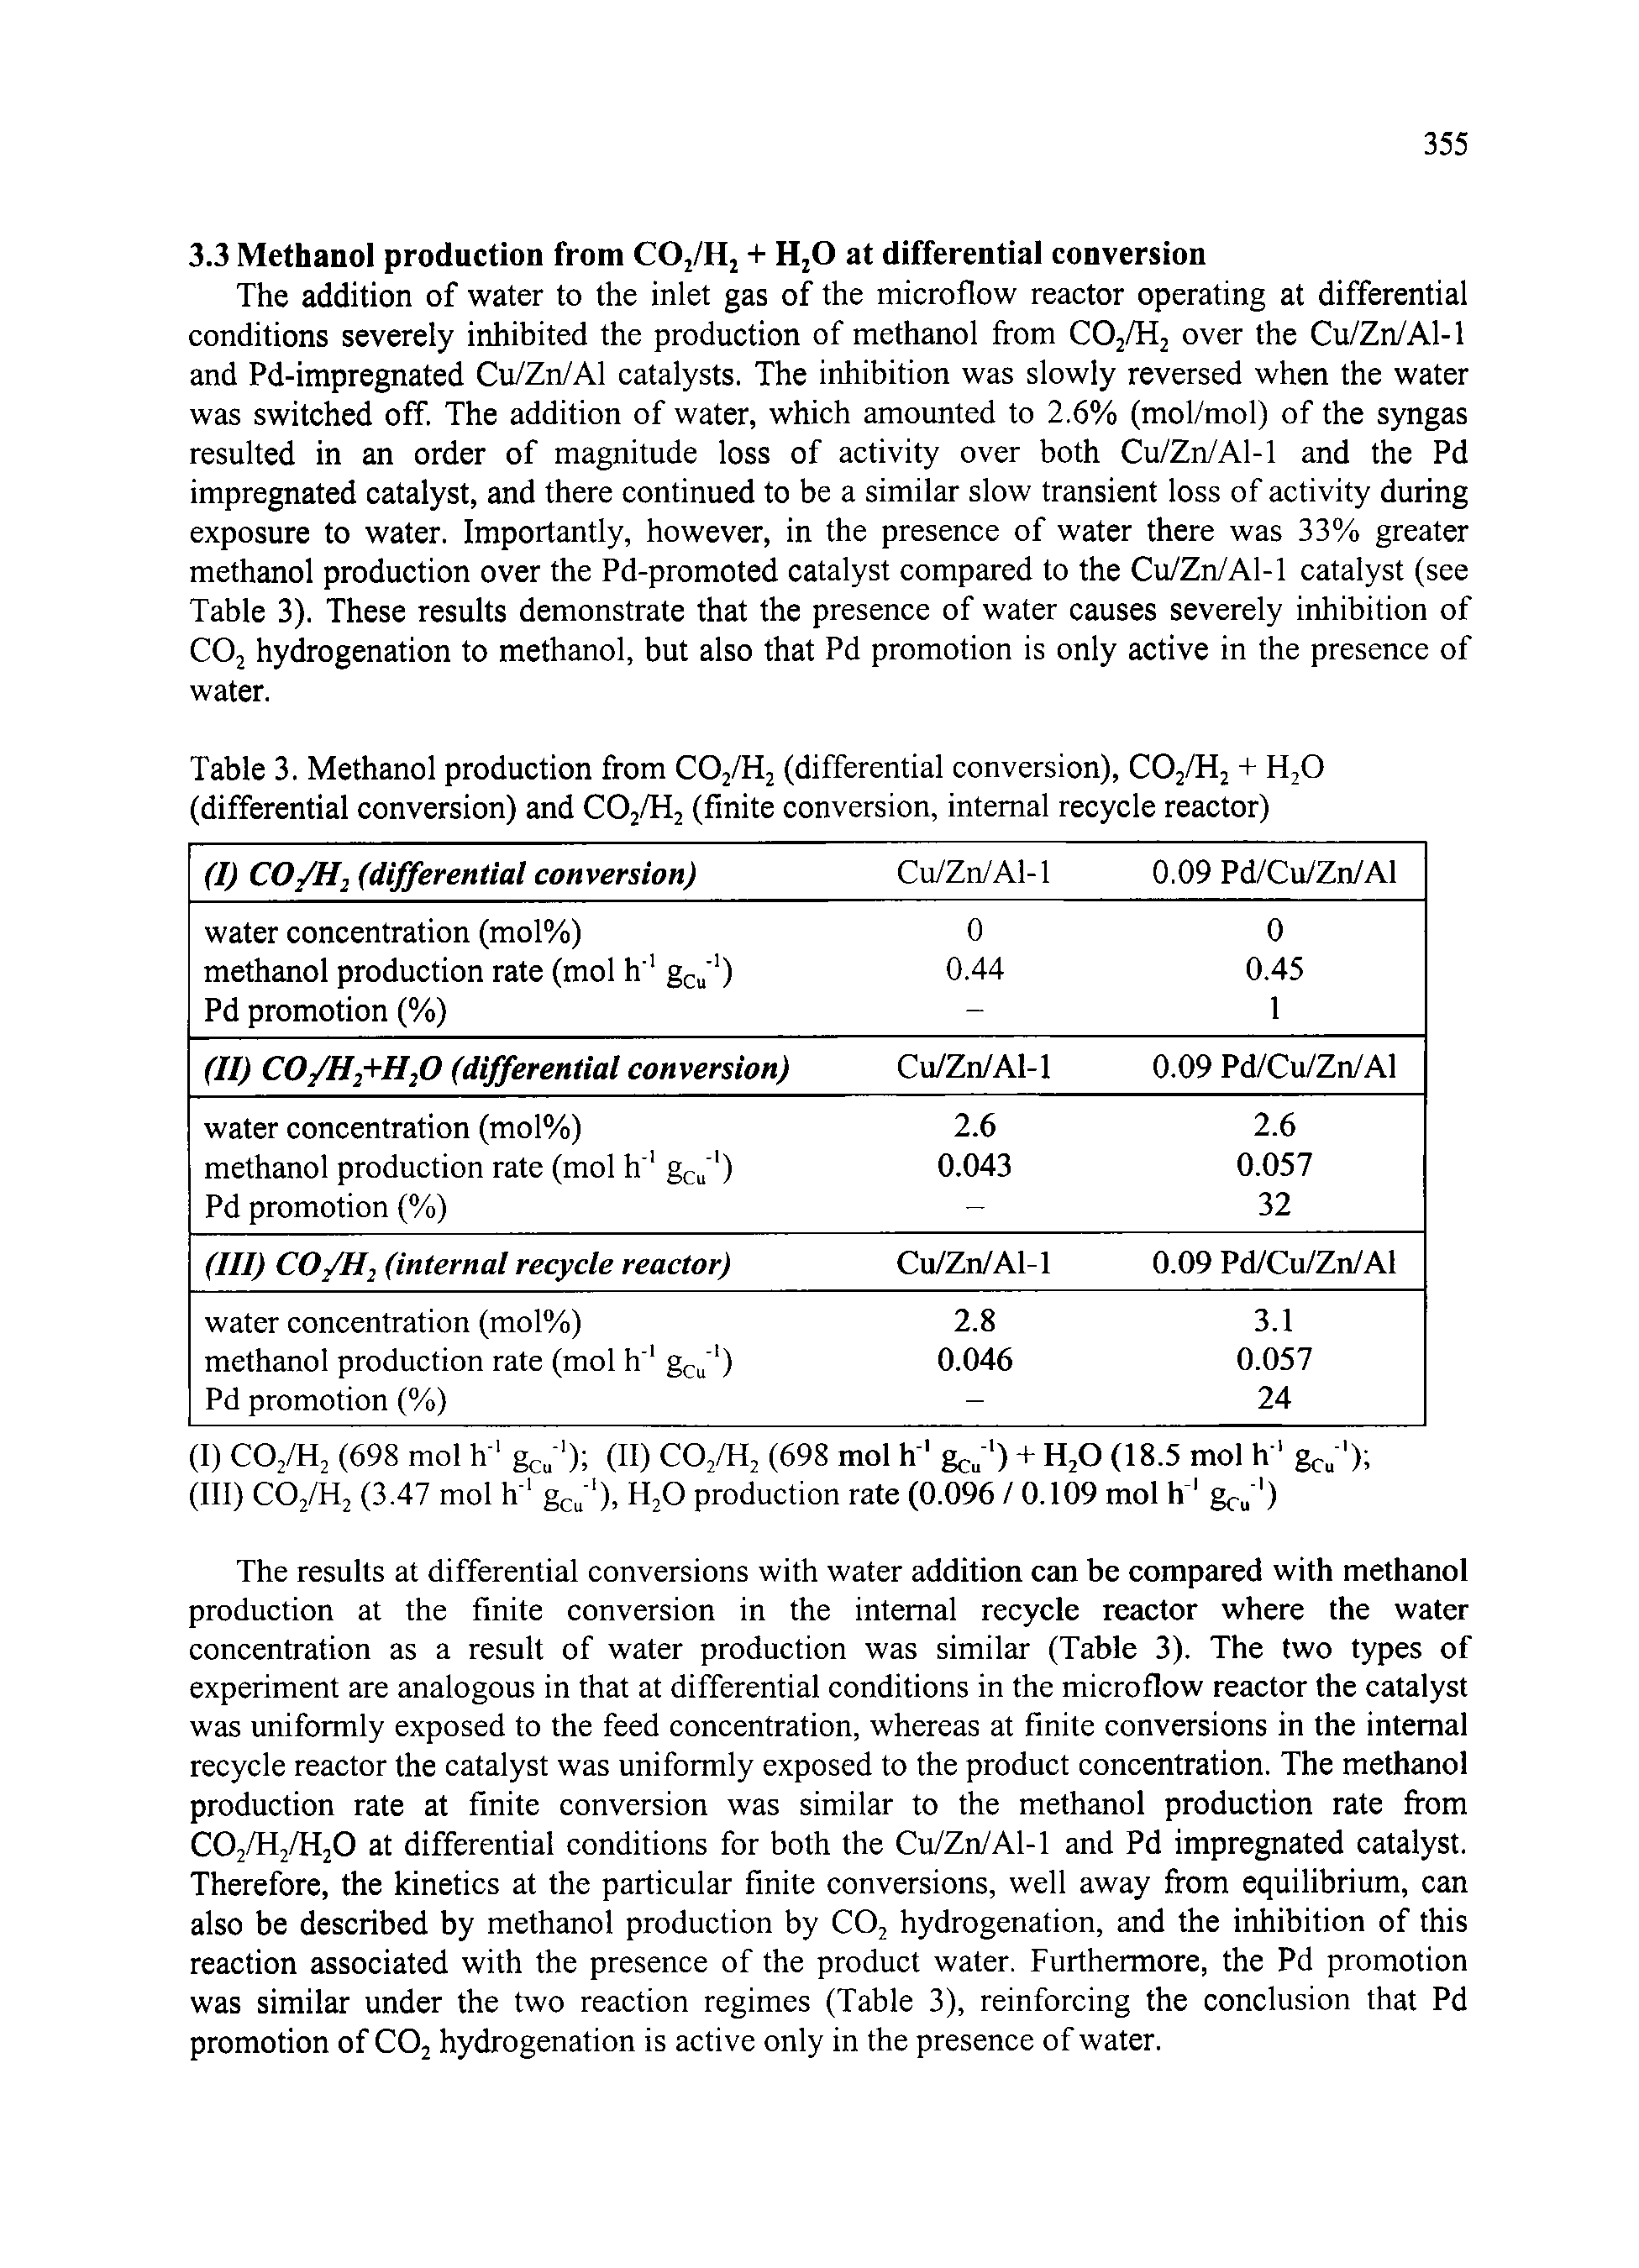 Table 3. Methanol production from COj/Hj (differential conversion), COj/Hj + H O (differential conversion) and COj/Hj (finite conversion, internal recycle reactor)...